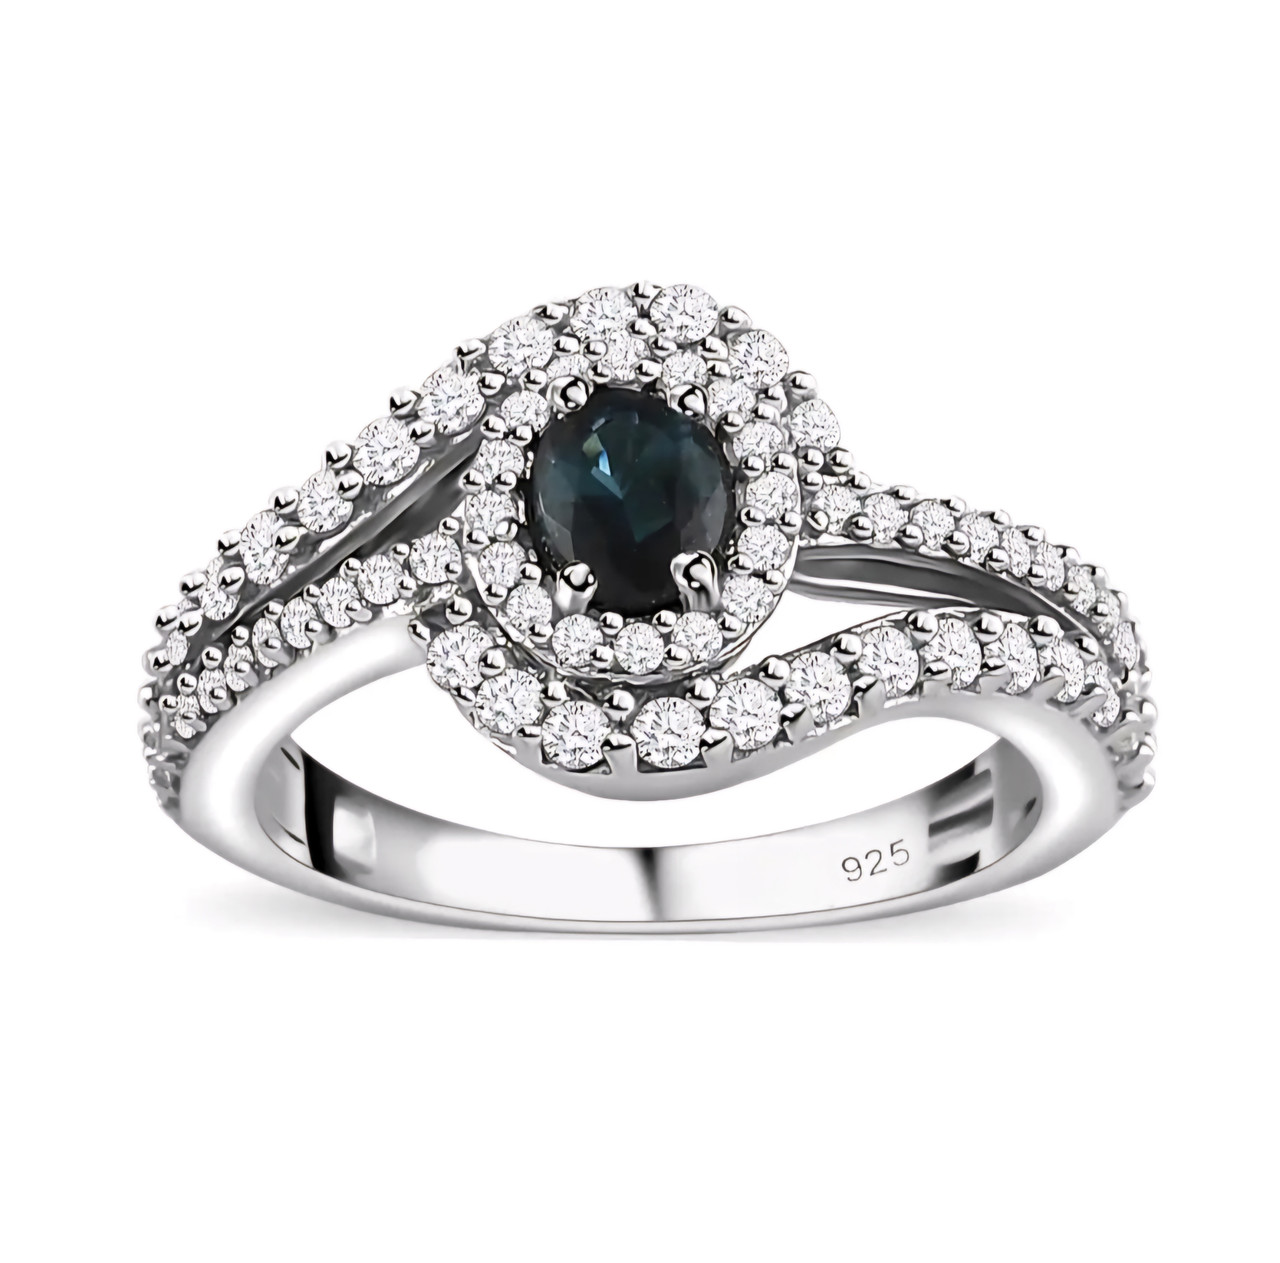 2Ct 6 8mm Oval Indicolite Tourmaline Engagement ring, Teal Green tourmaline  ring | eBay